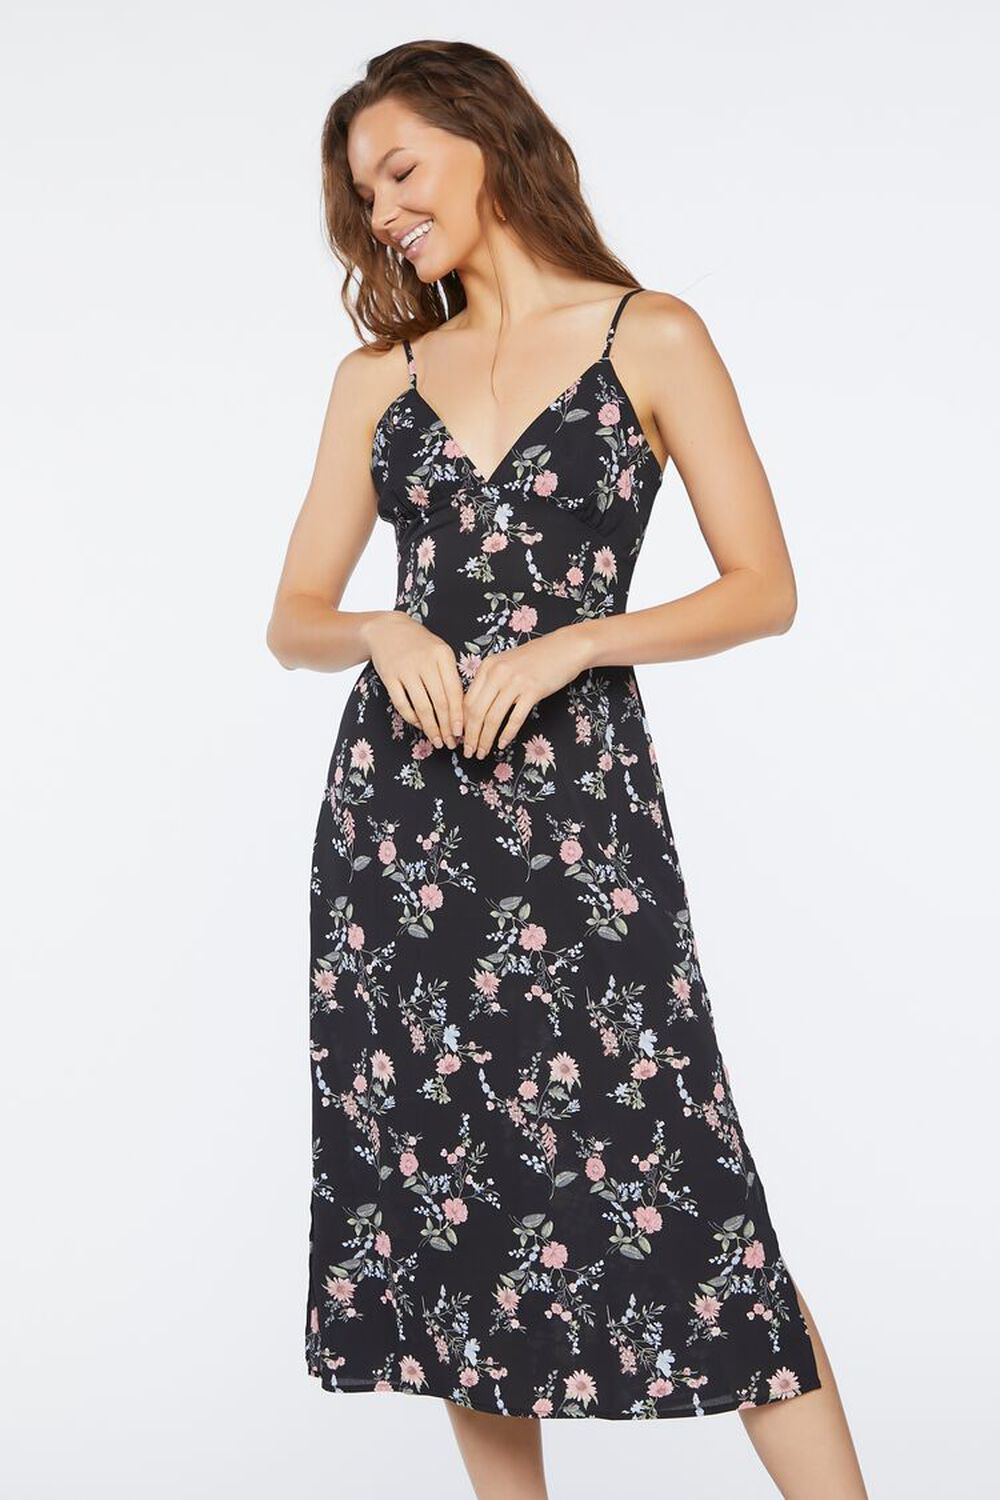 BLACK/MULTI Floral Print Midi Dress, image 1